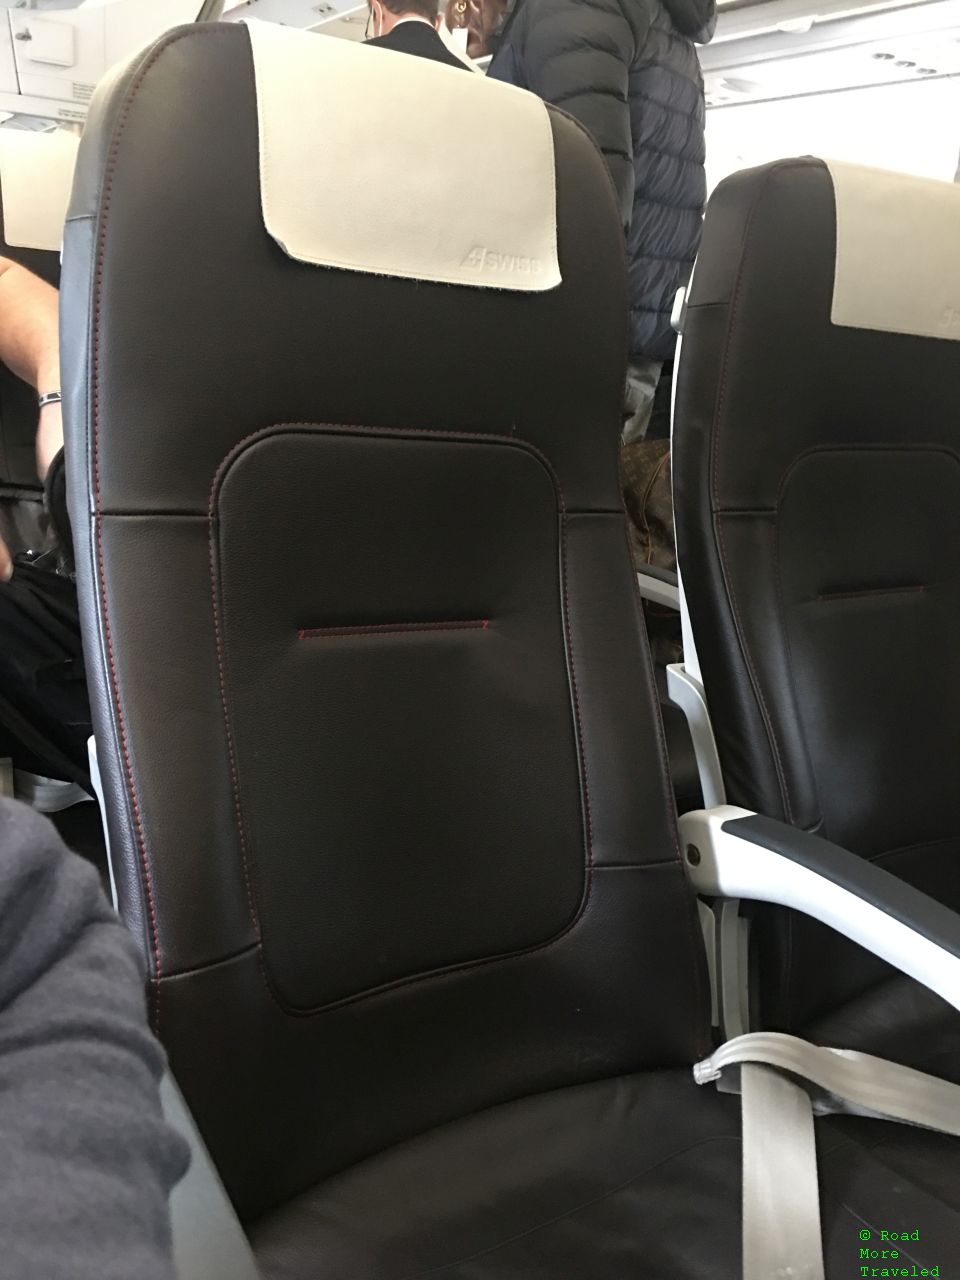 SWISS A321neo Business Class seat